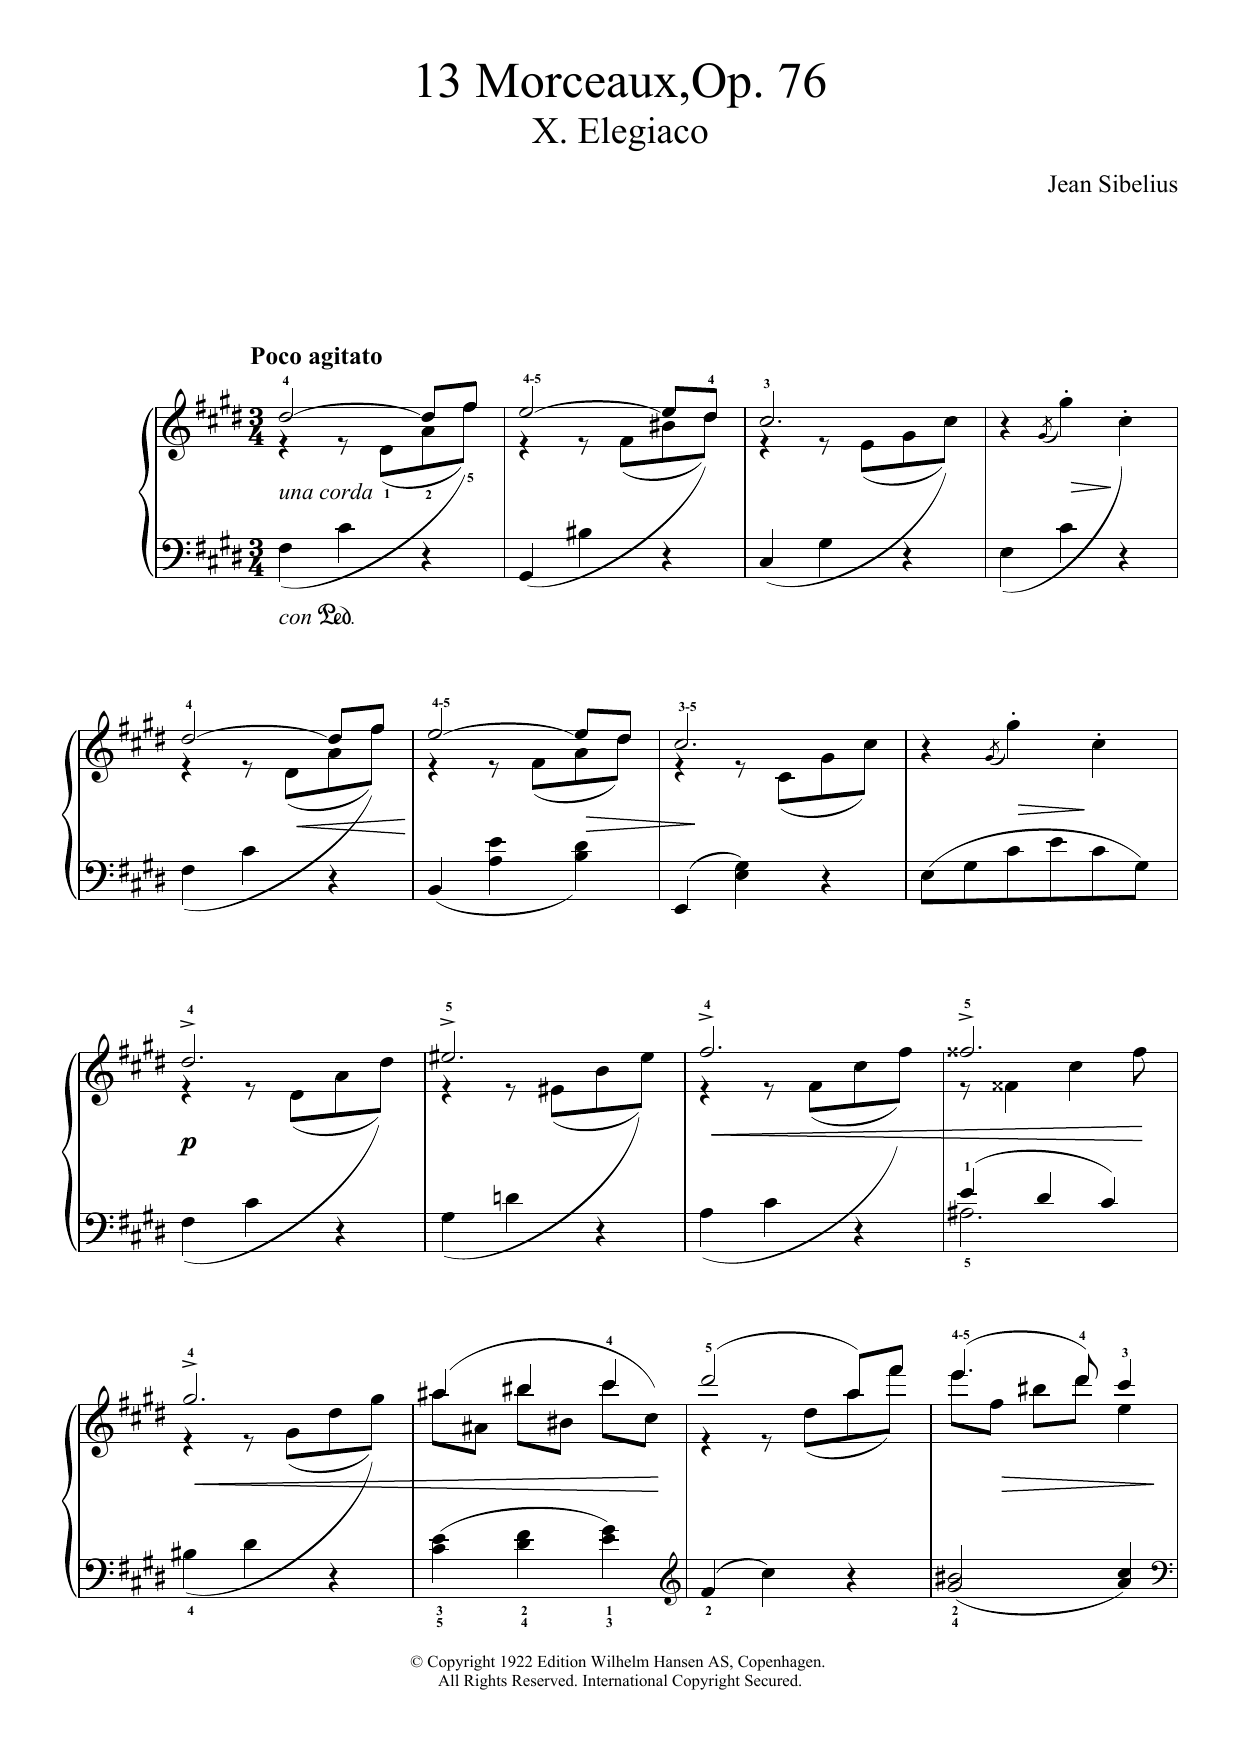 Jean Sibelius 13 Morceaux, Op.76 - X. Elegiaco Sheet Music Notes & Chords for Piano - Download or Print PDF